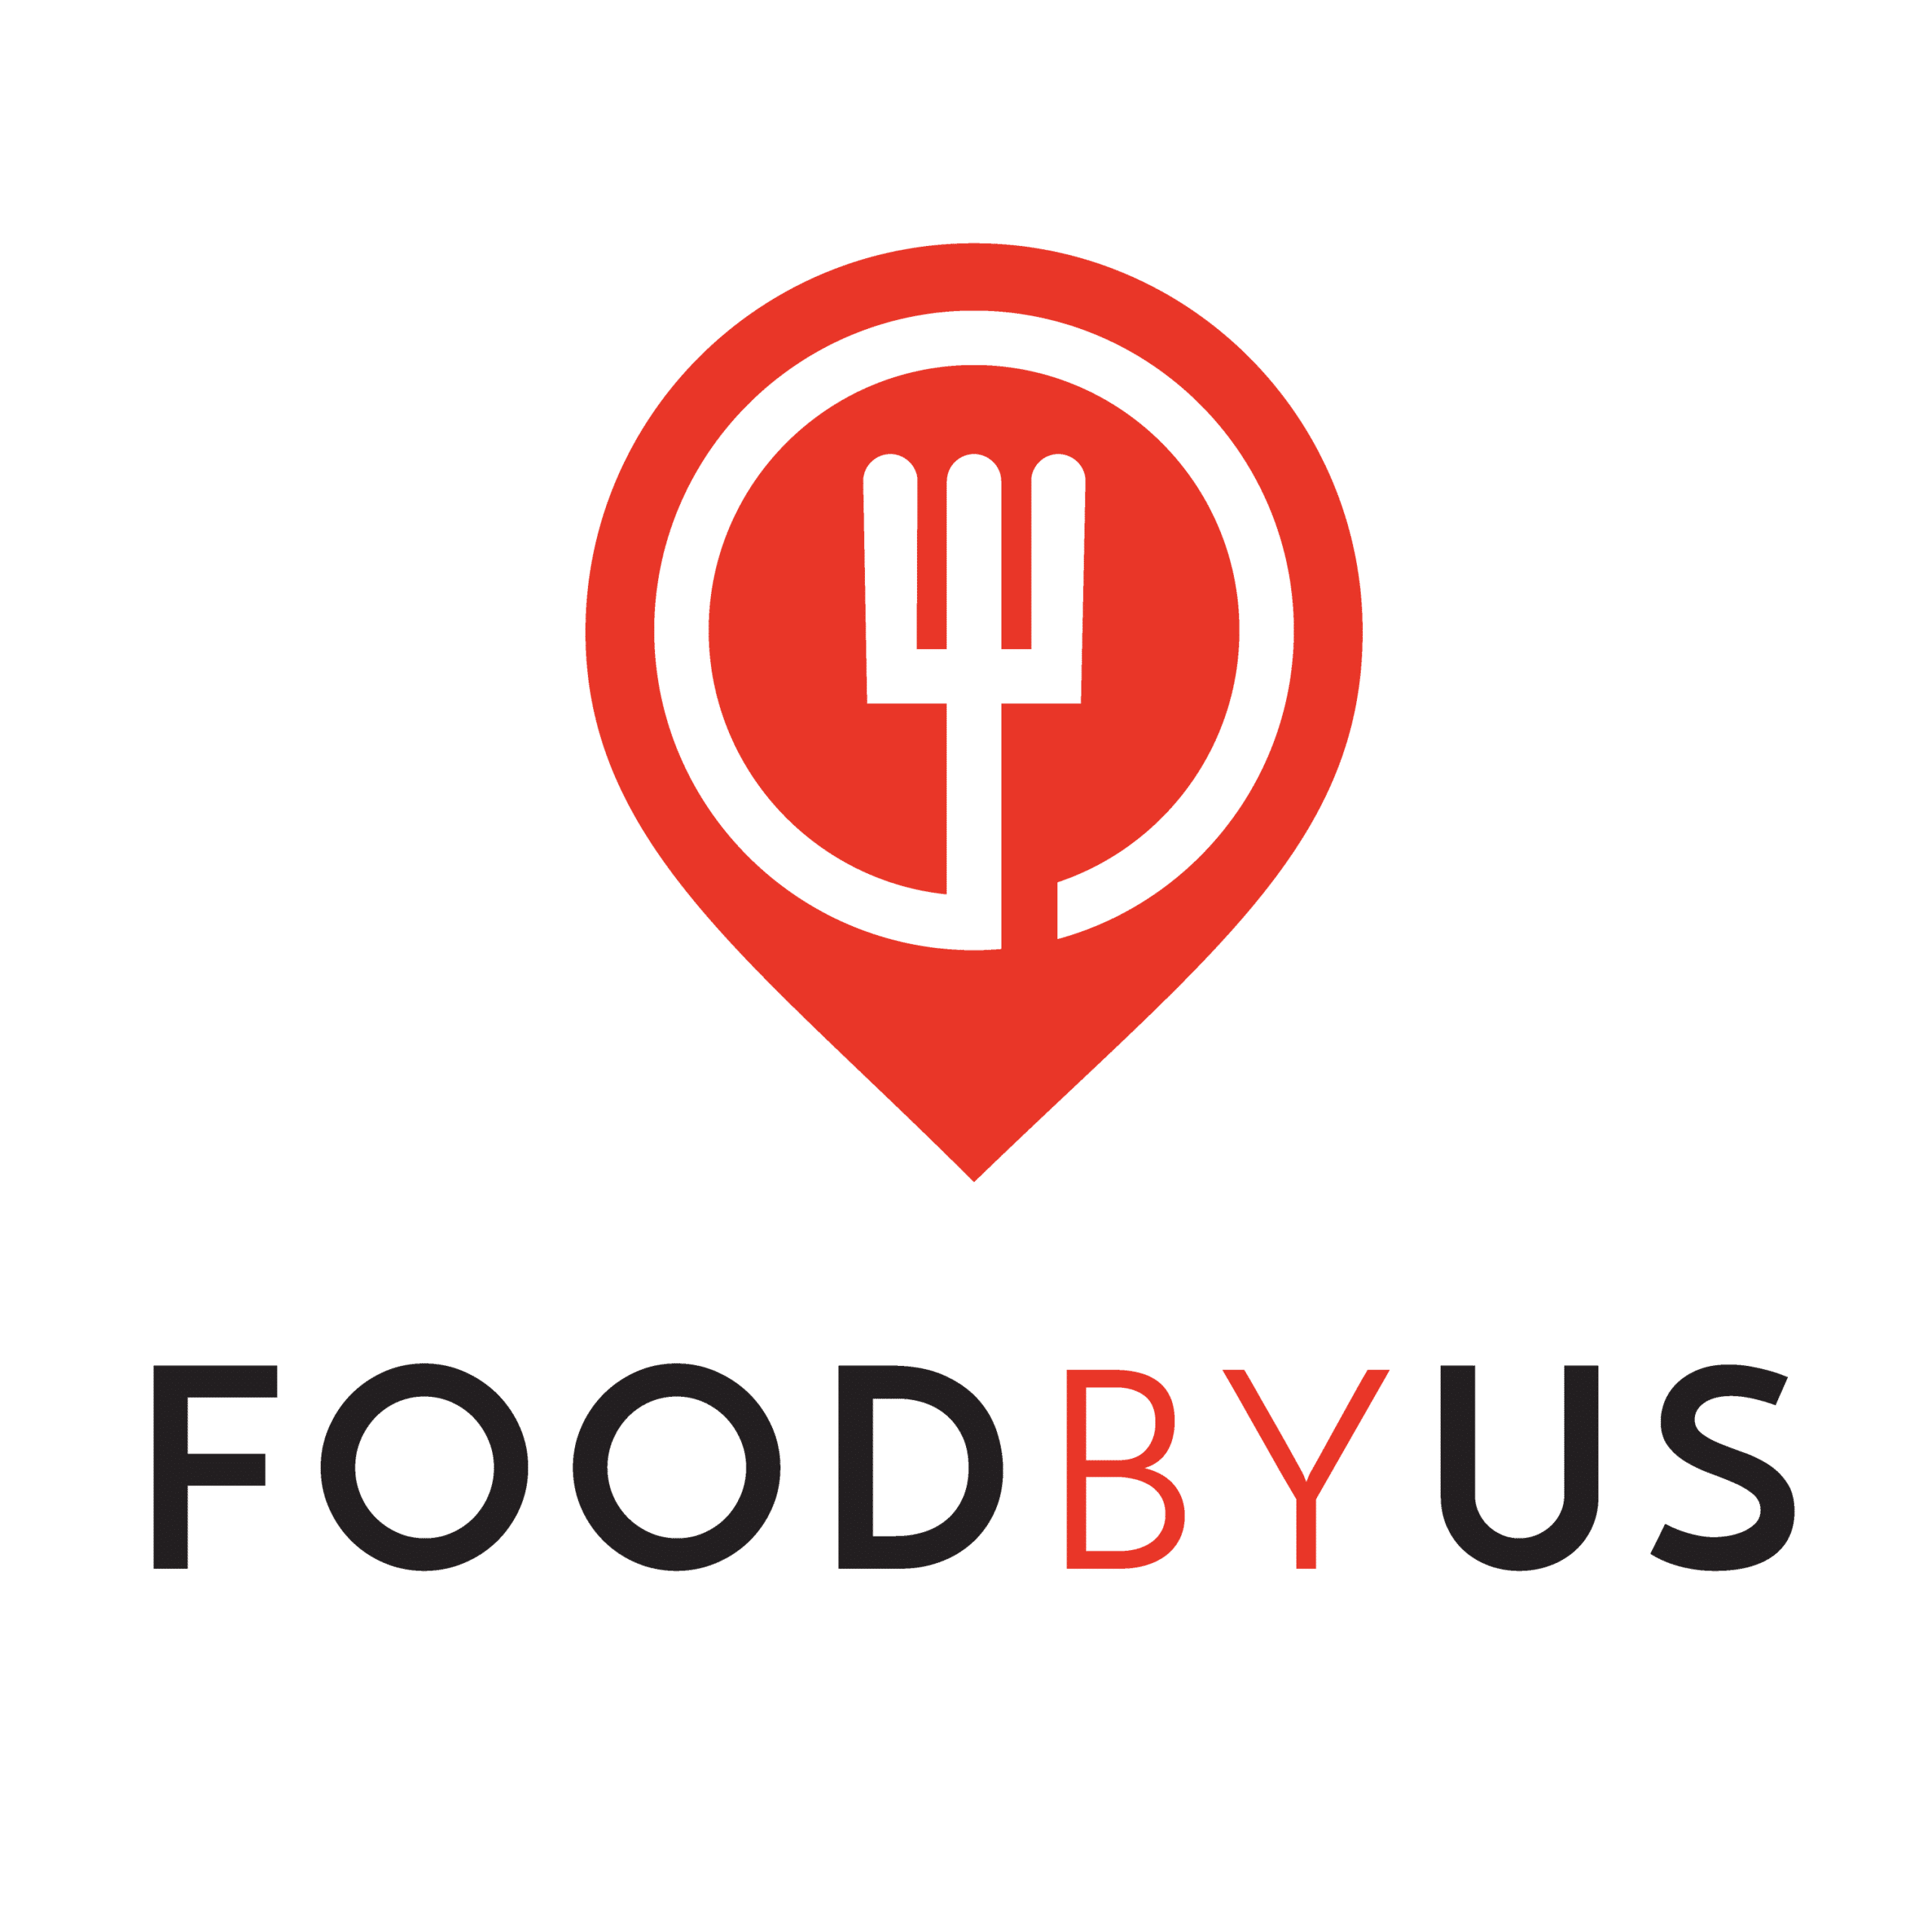 (c) Foodbyus.com.au